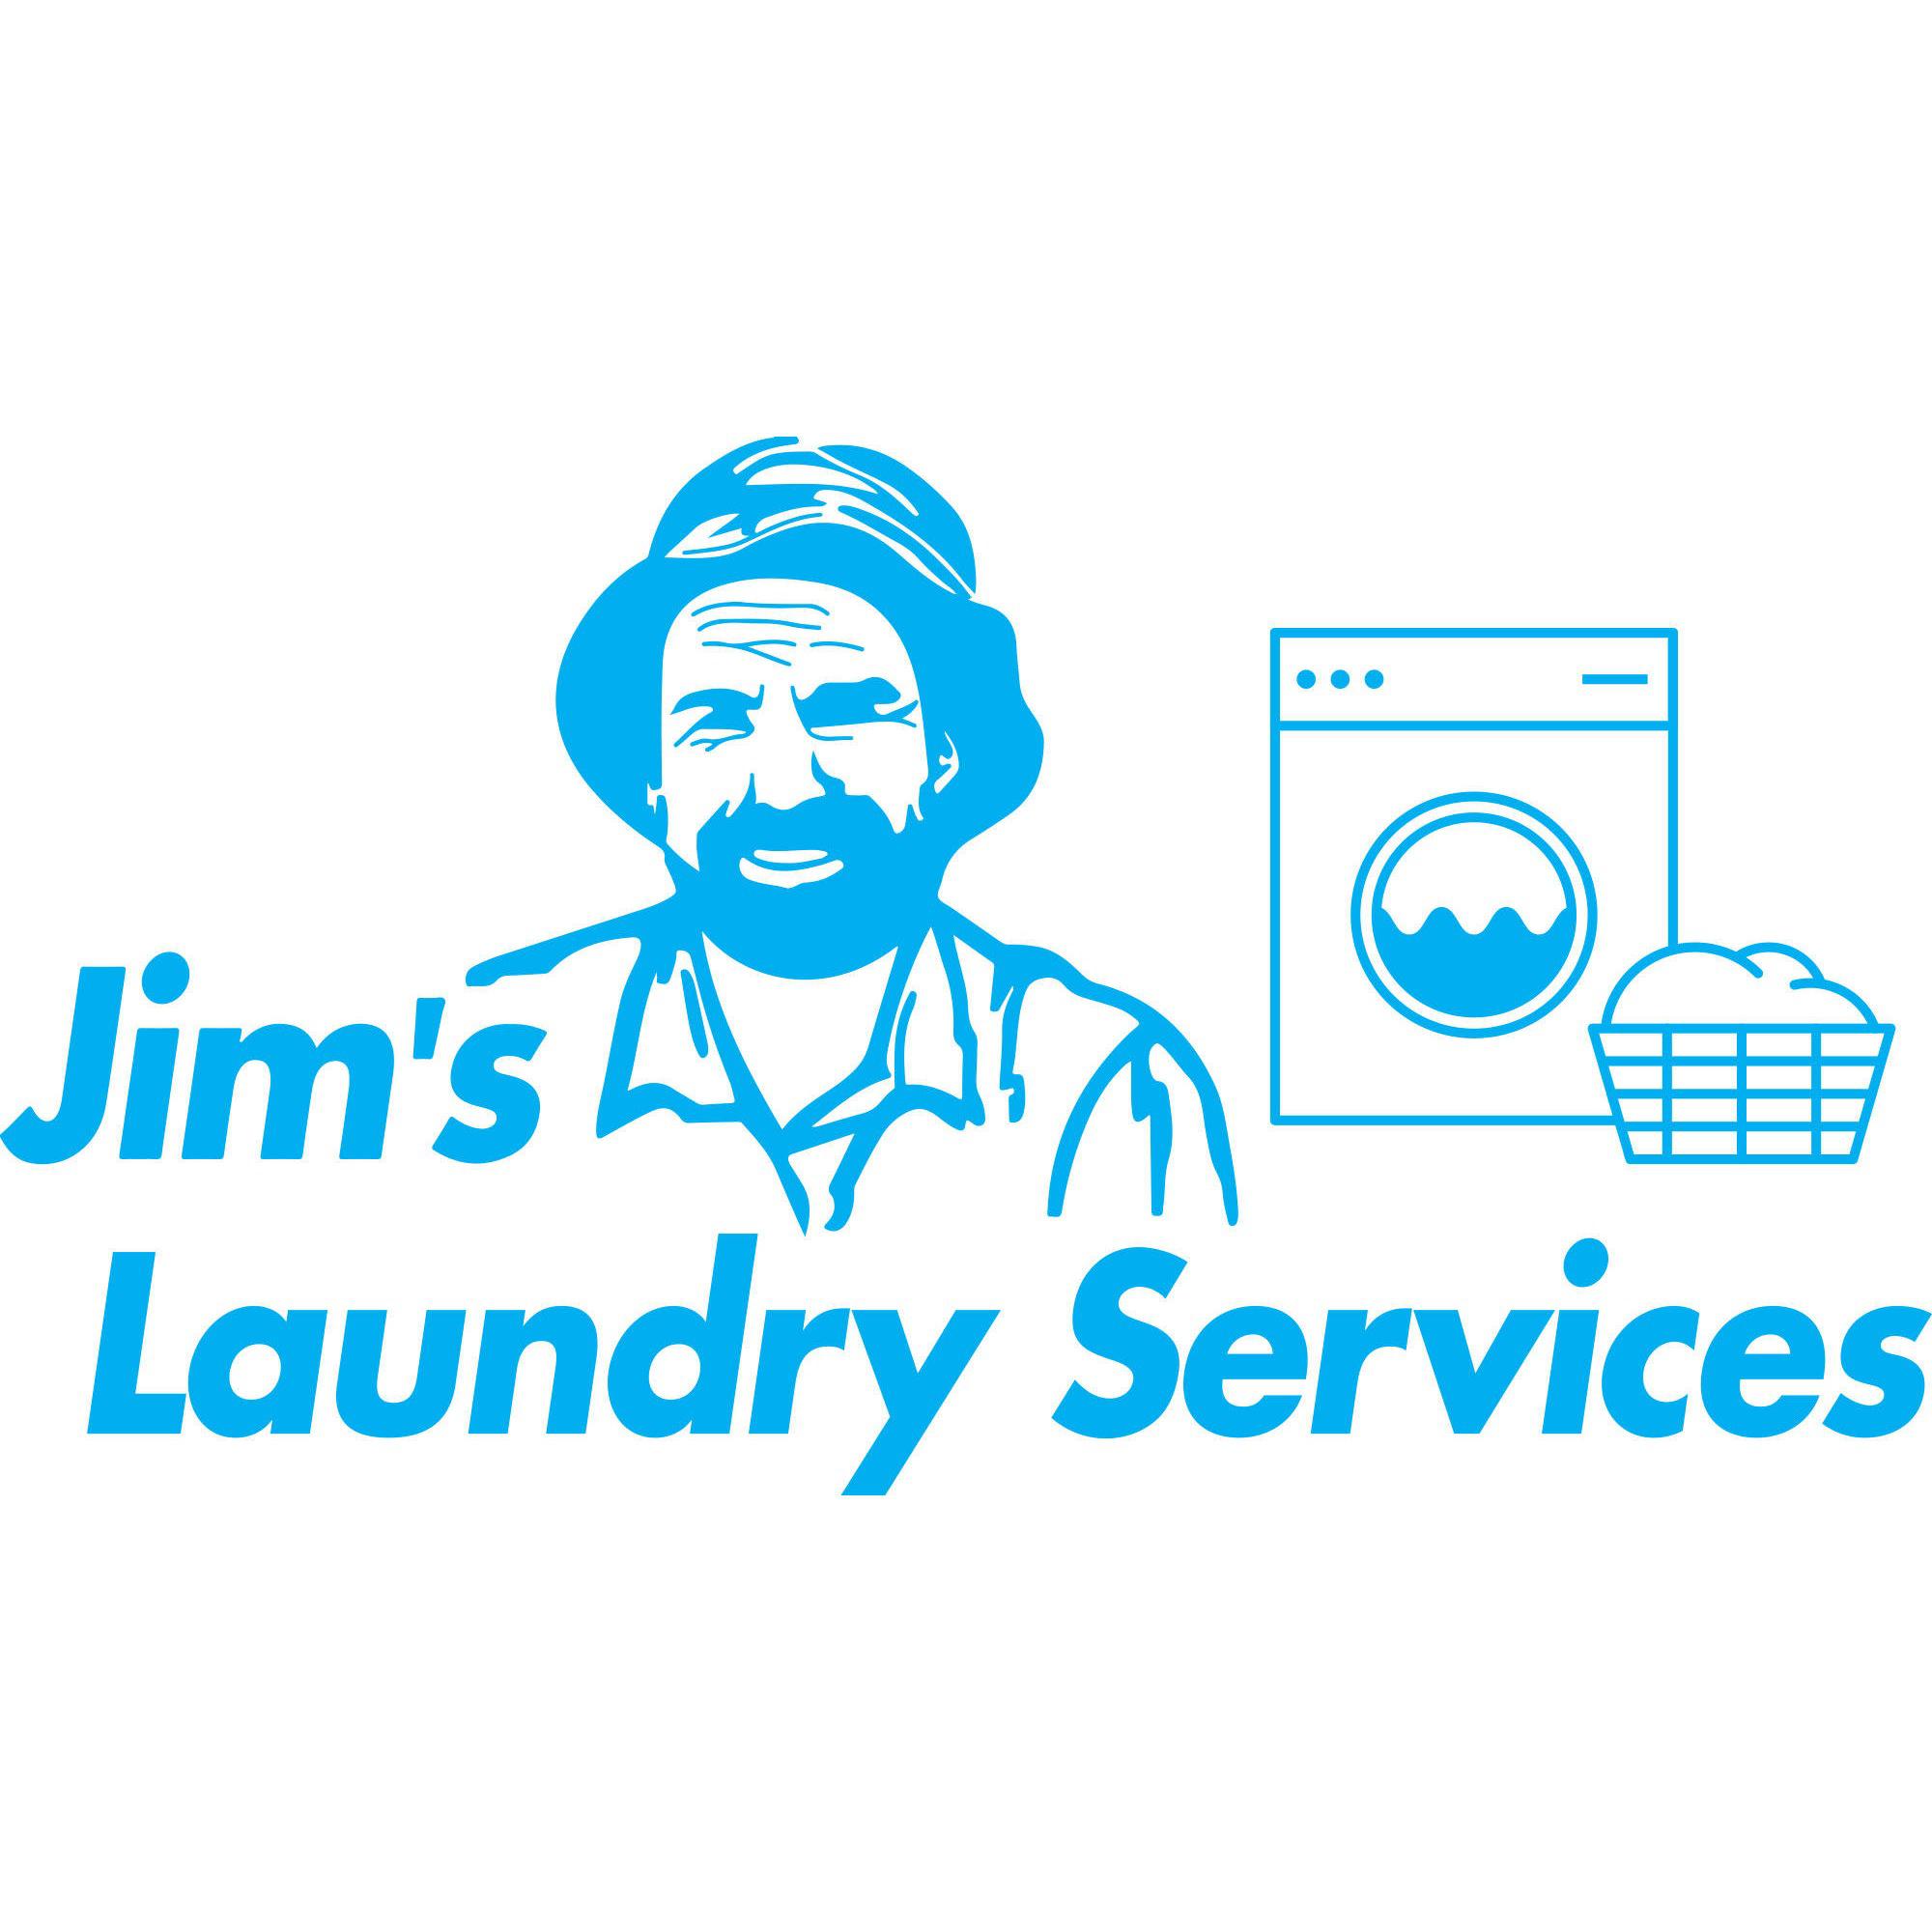 Jim's Laundry Services Brunswick Moreland